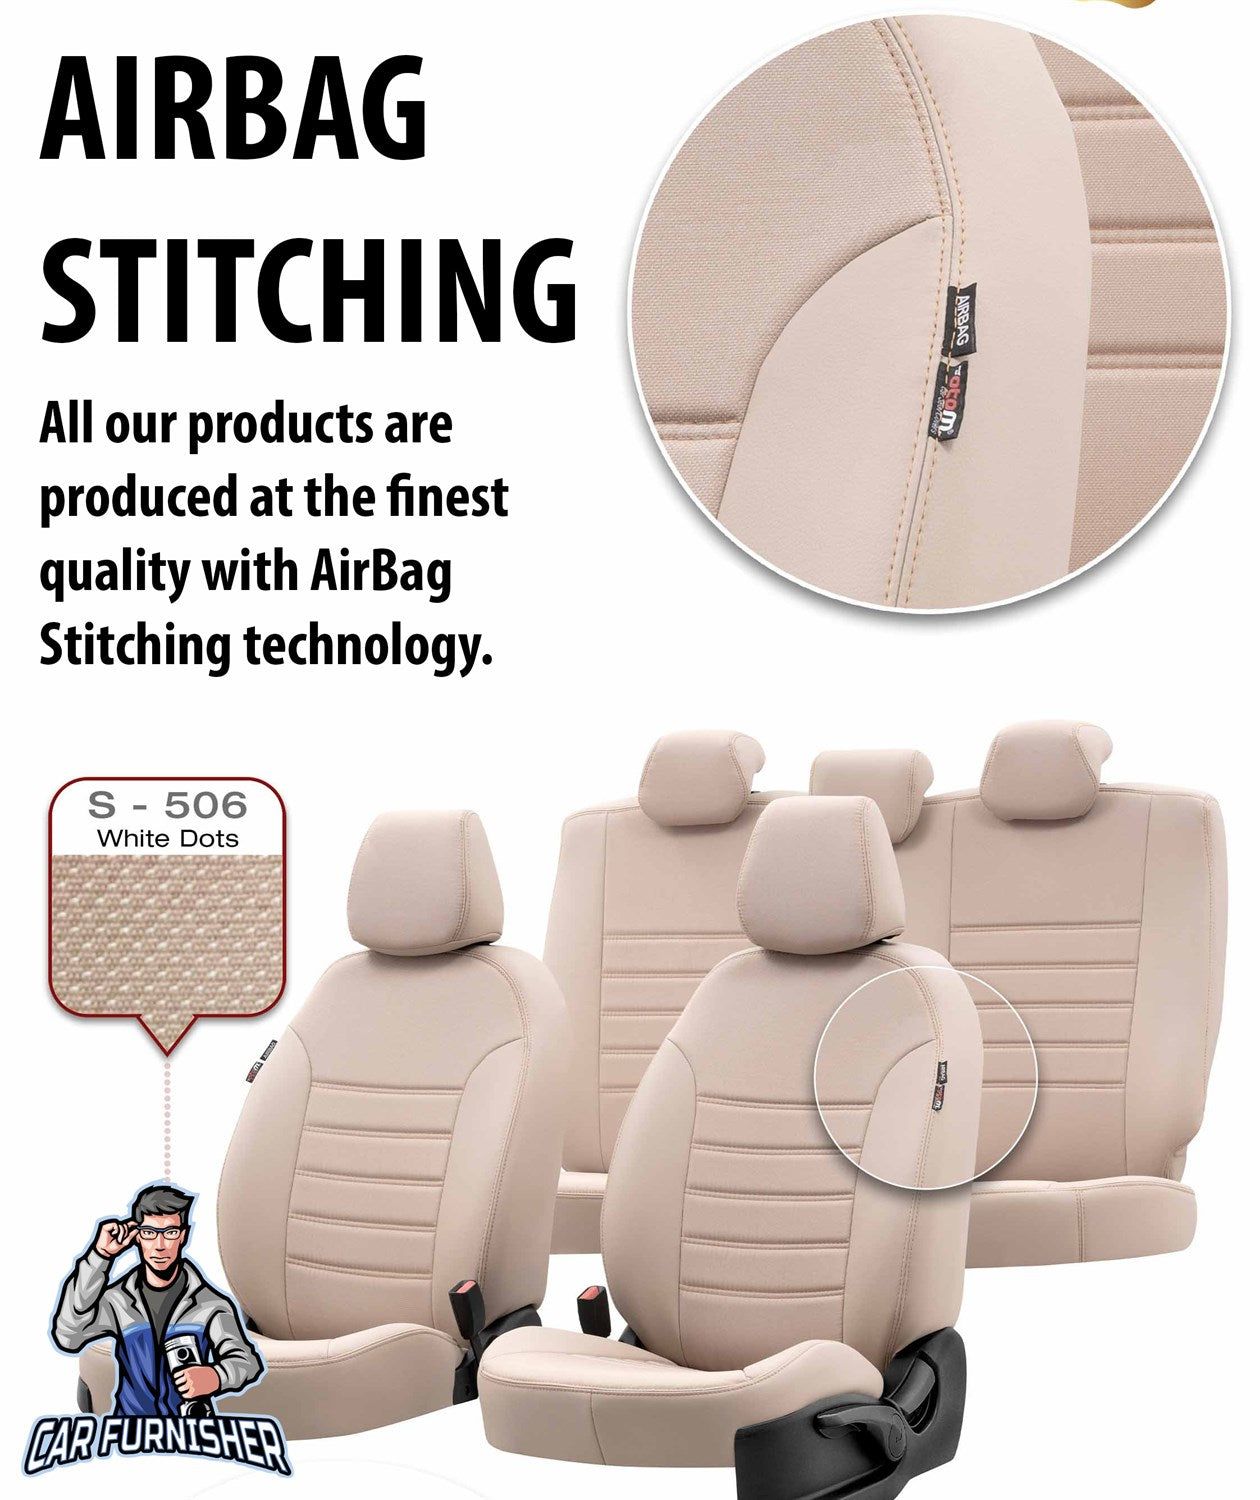 Nissan NV400 Seat Cover Original Jacquard Design Gray Leather & Jacquard Fabric